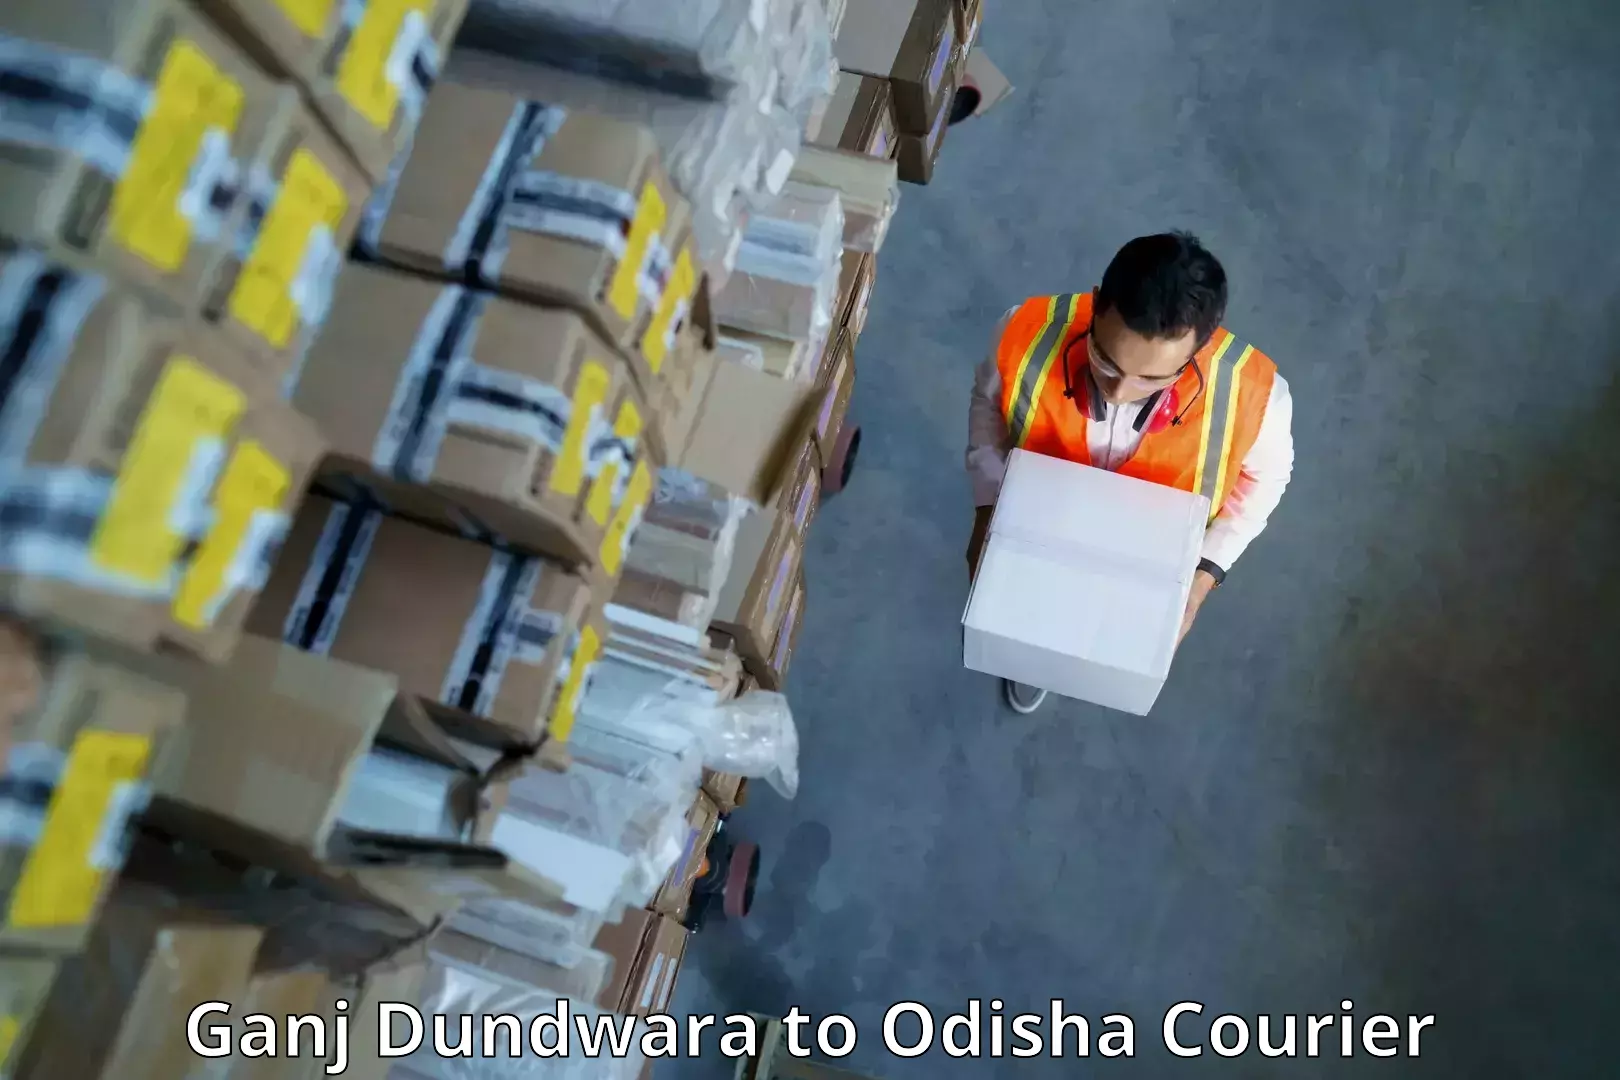 Next-day delivery options Ganj Dundwara to Odisha